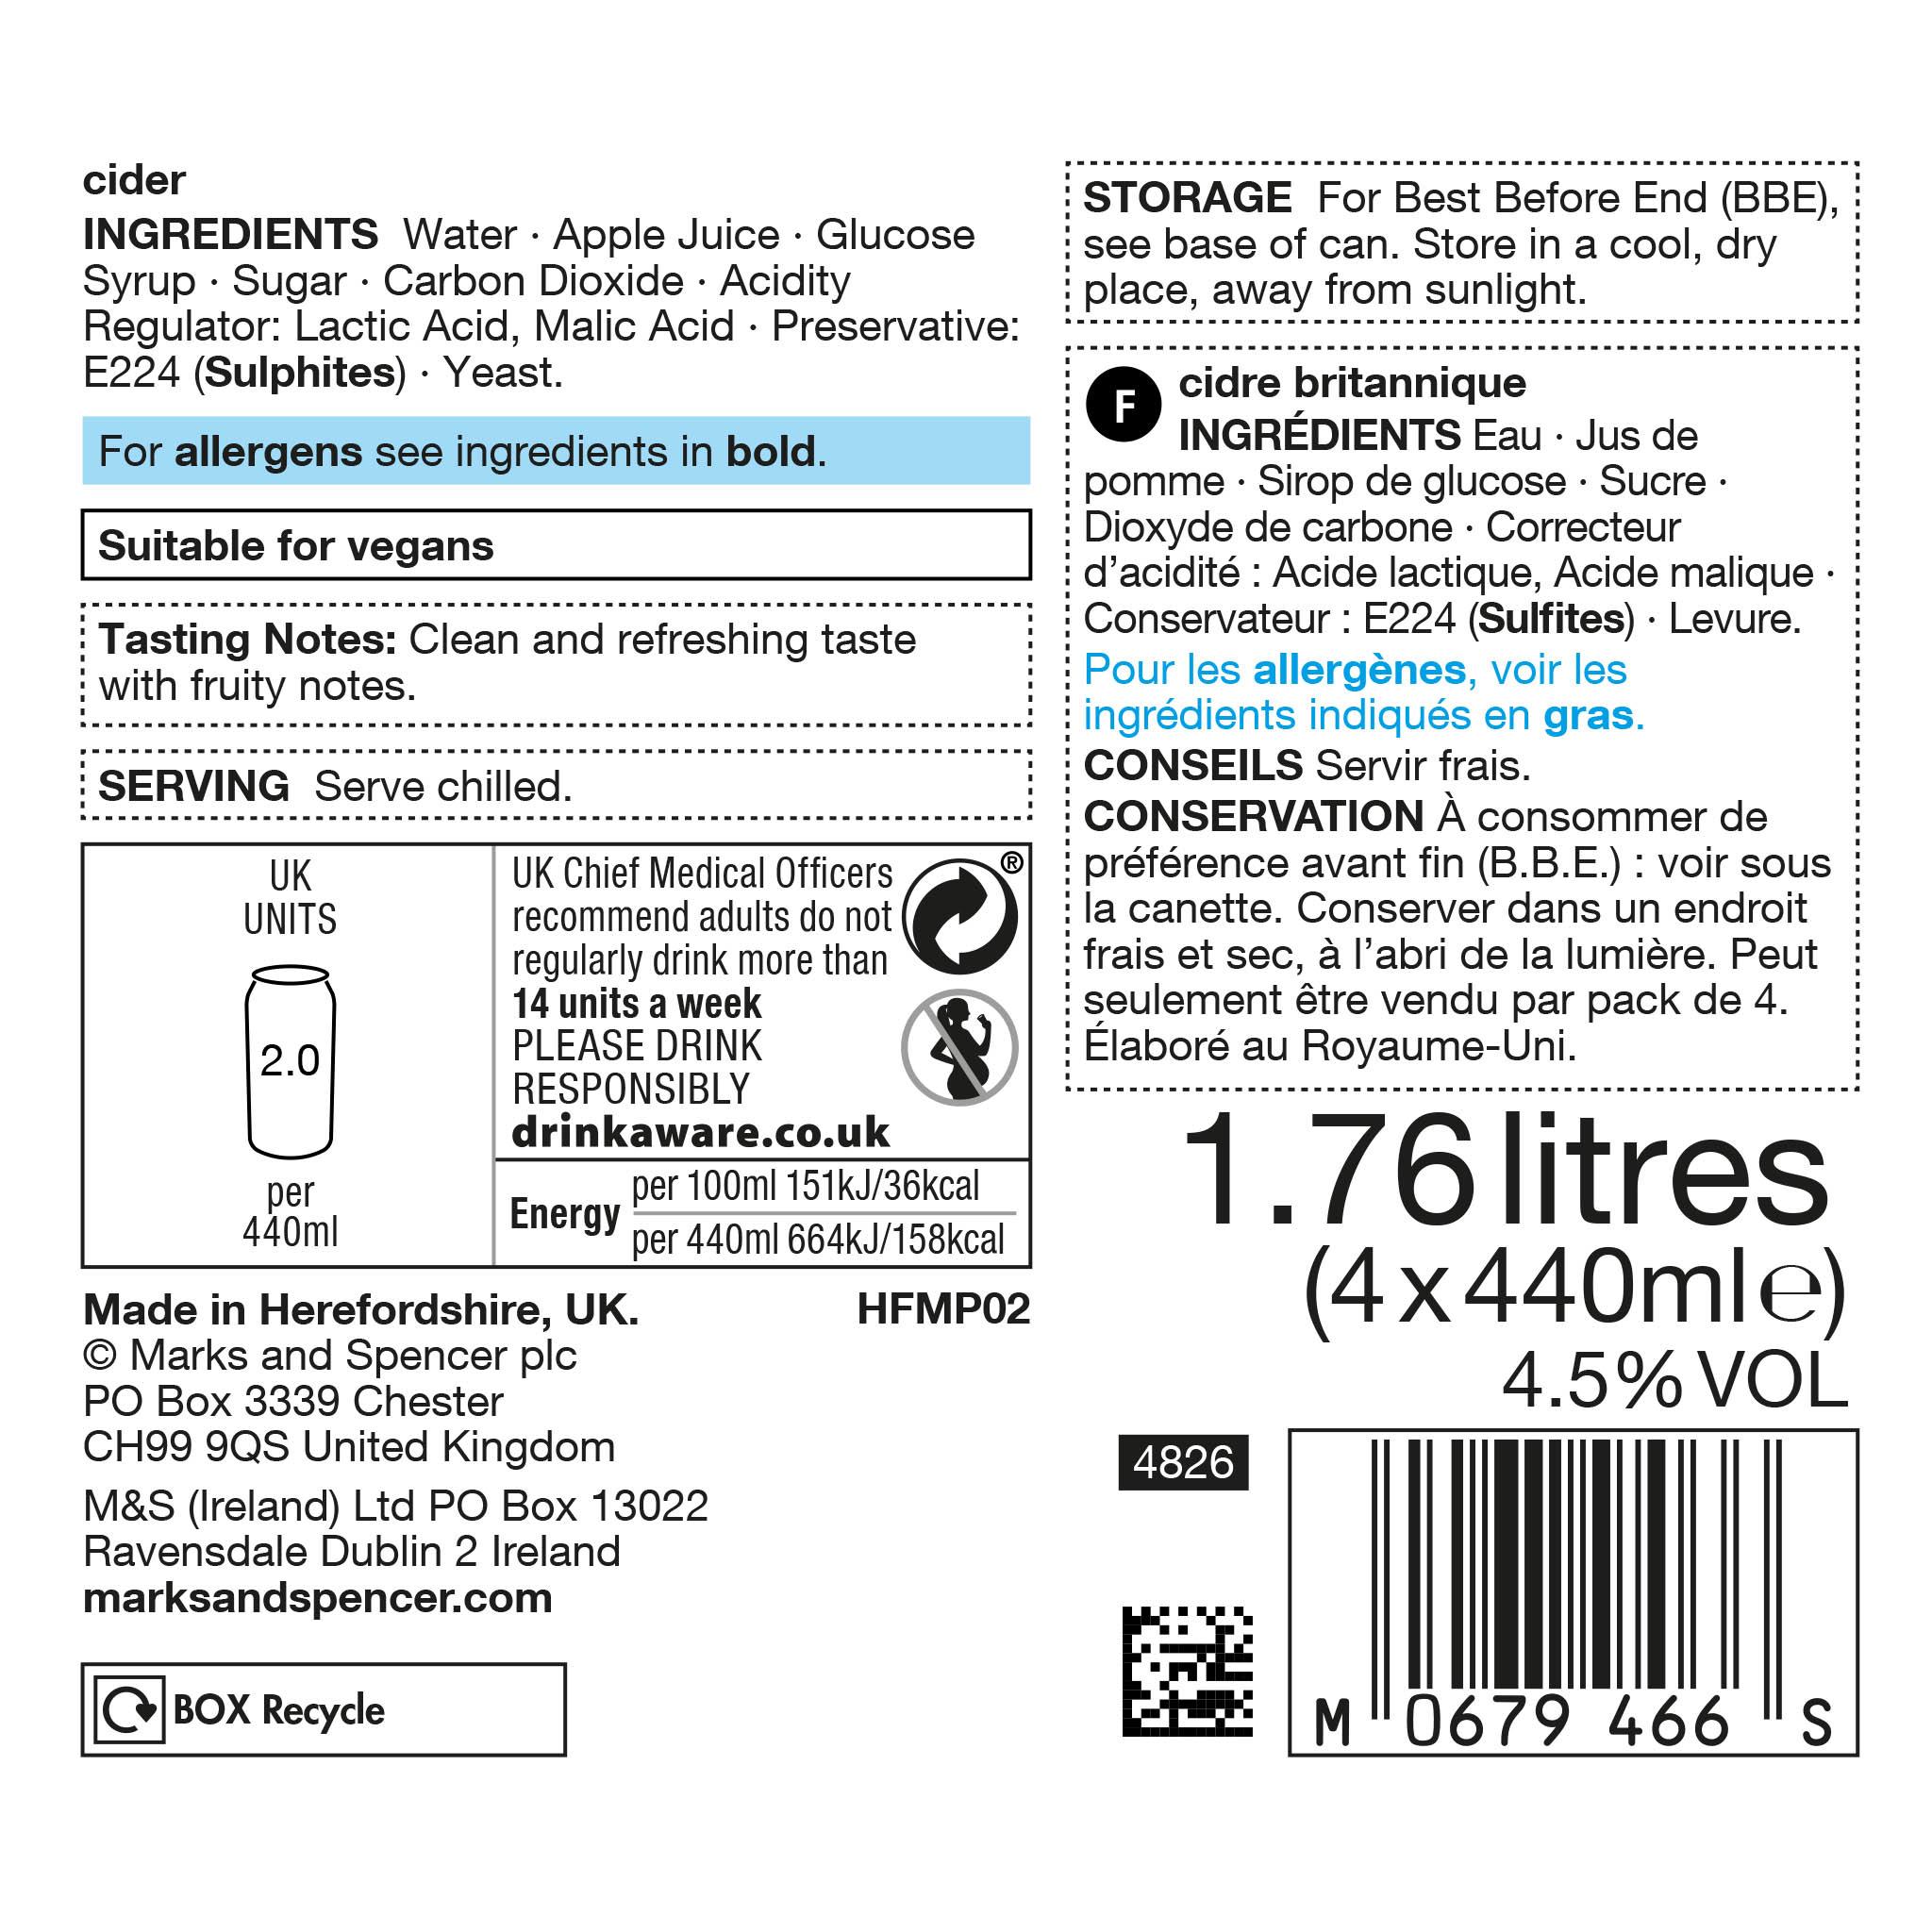 Herefordshire Cider x 4 440ml Label